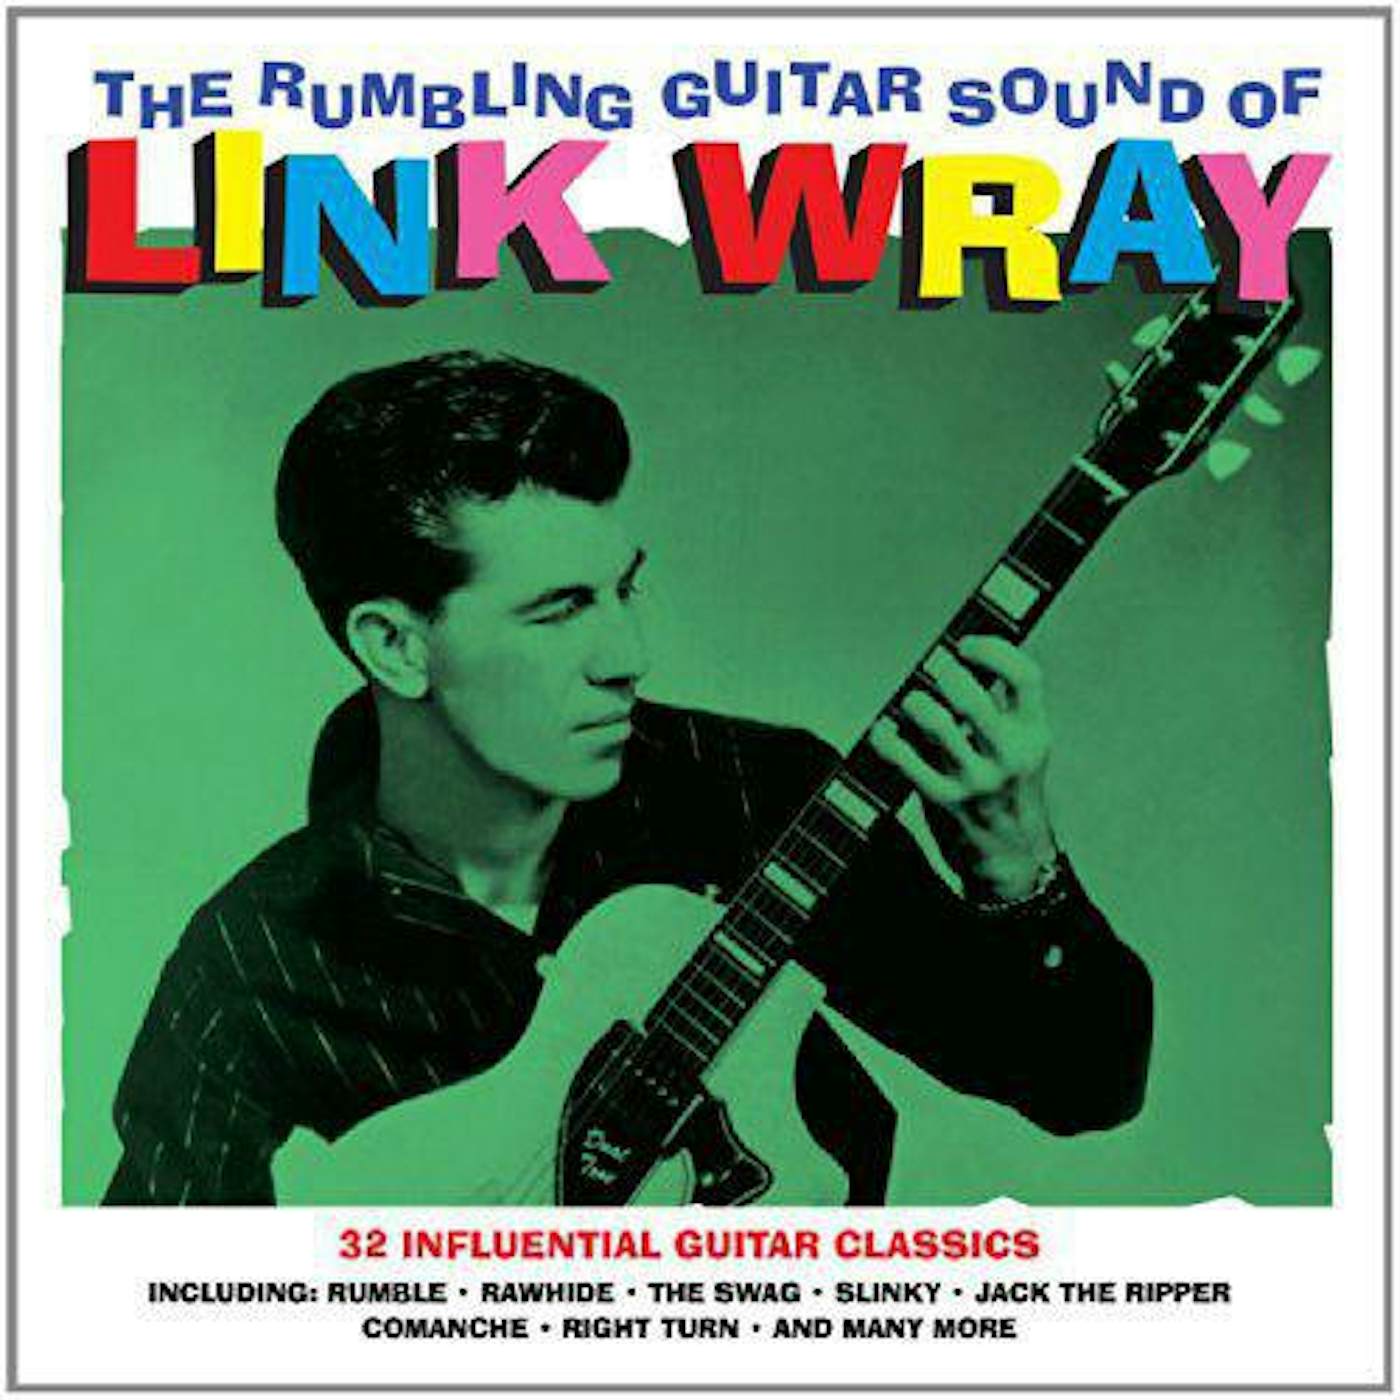 Link Wray Rumbling Guitar Sound Of (2LP) Vinyl Record